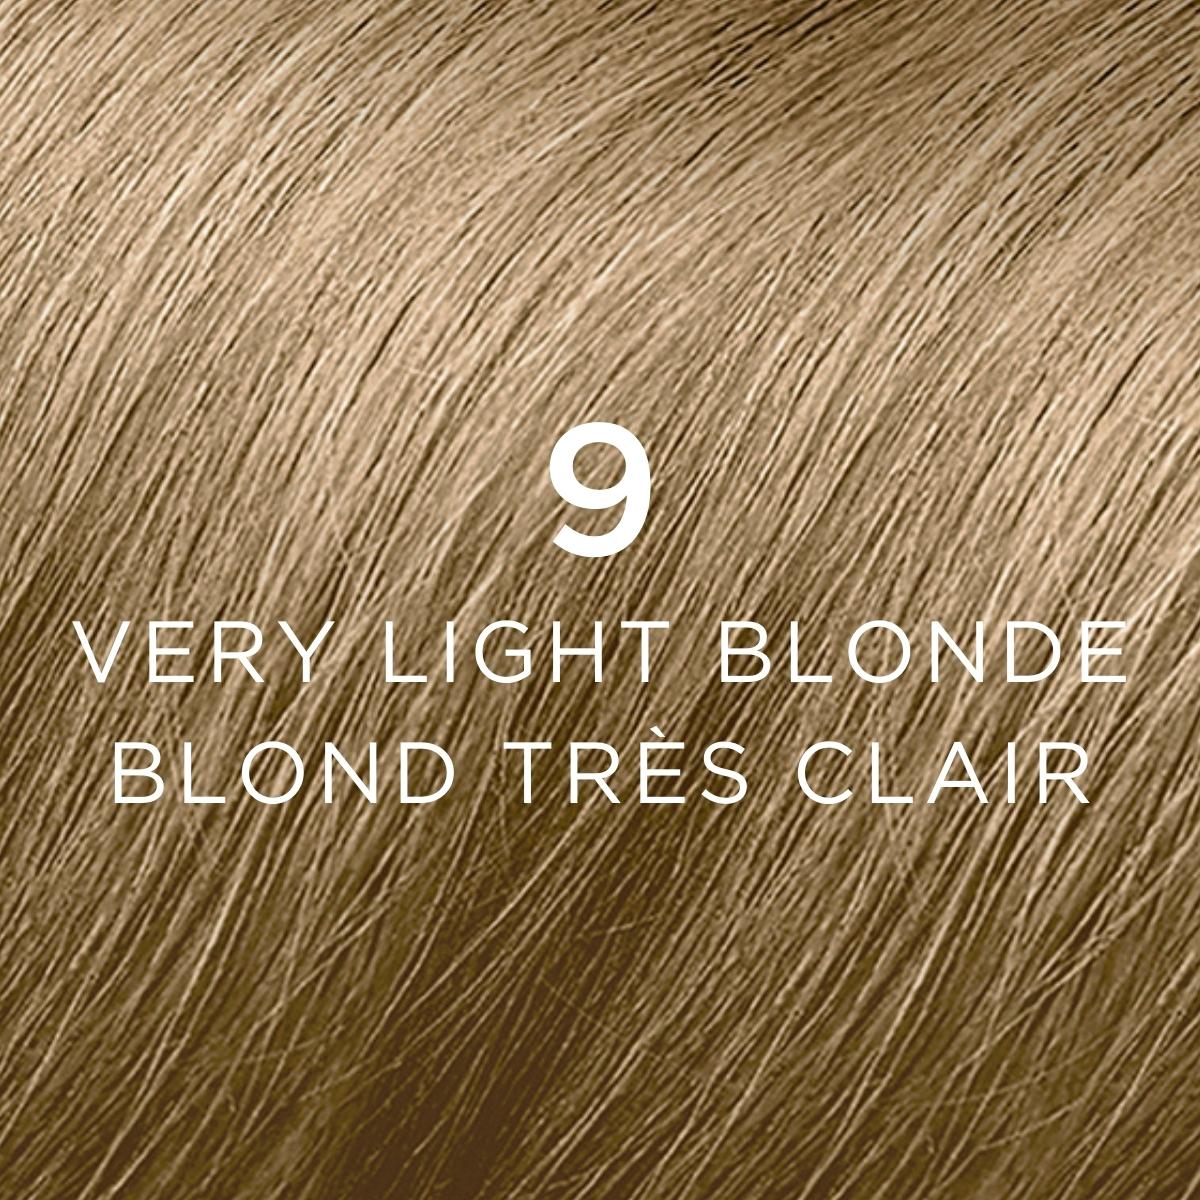 9 Very Light Blonde